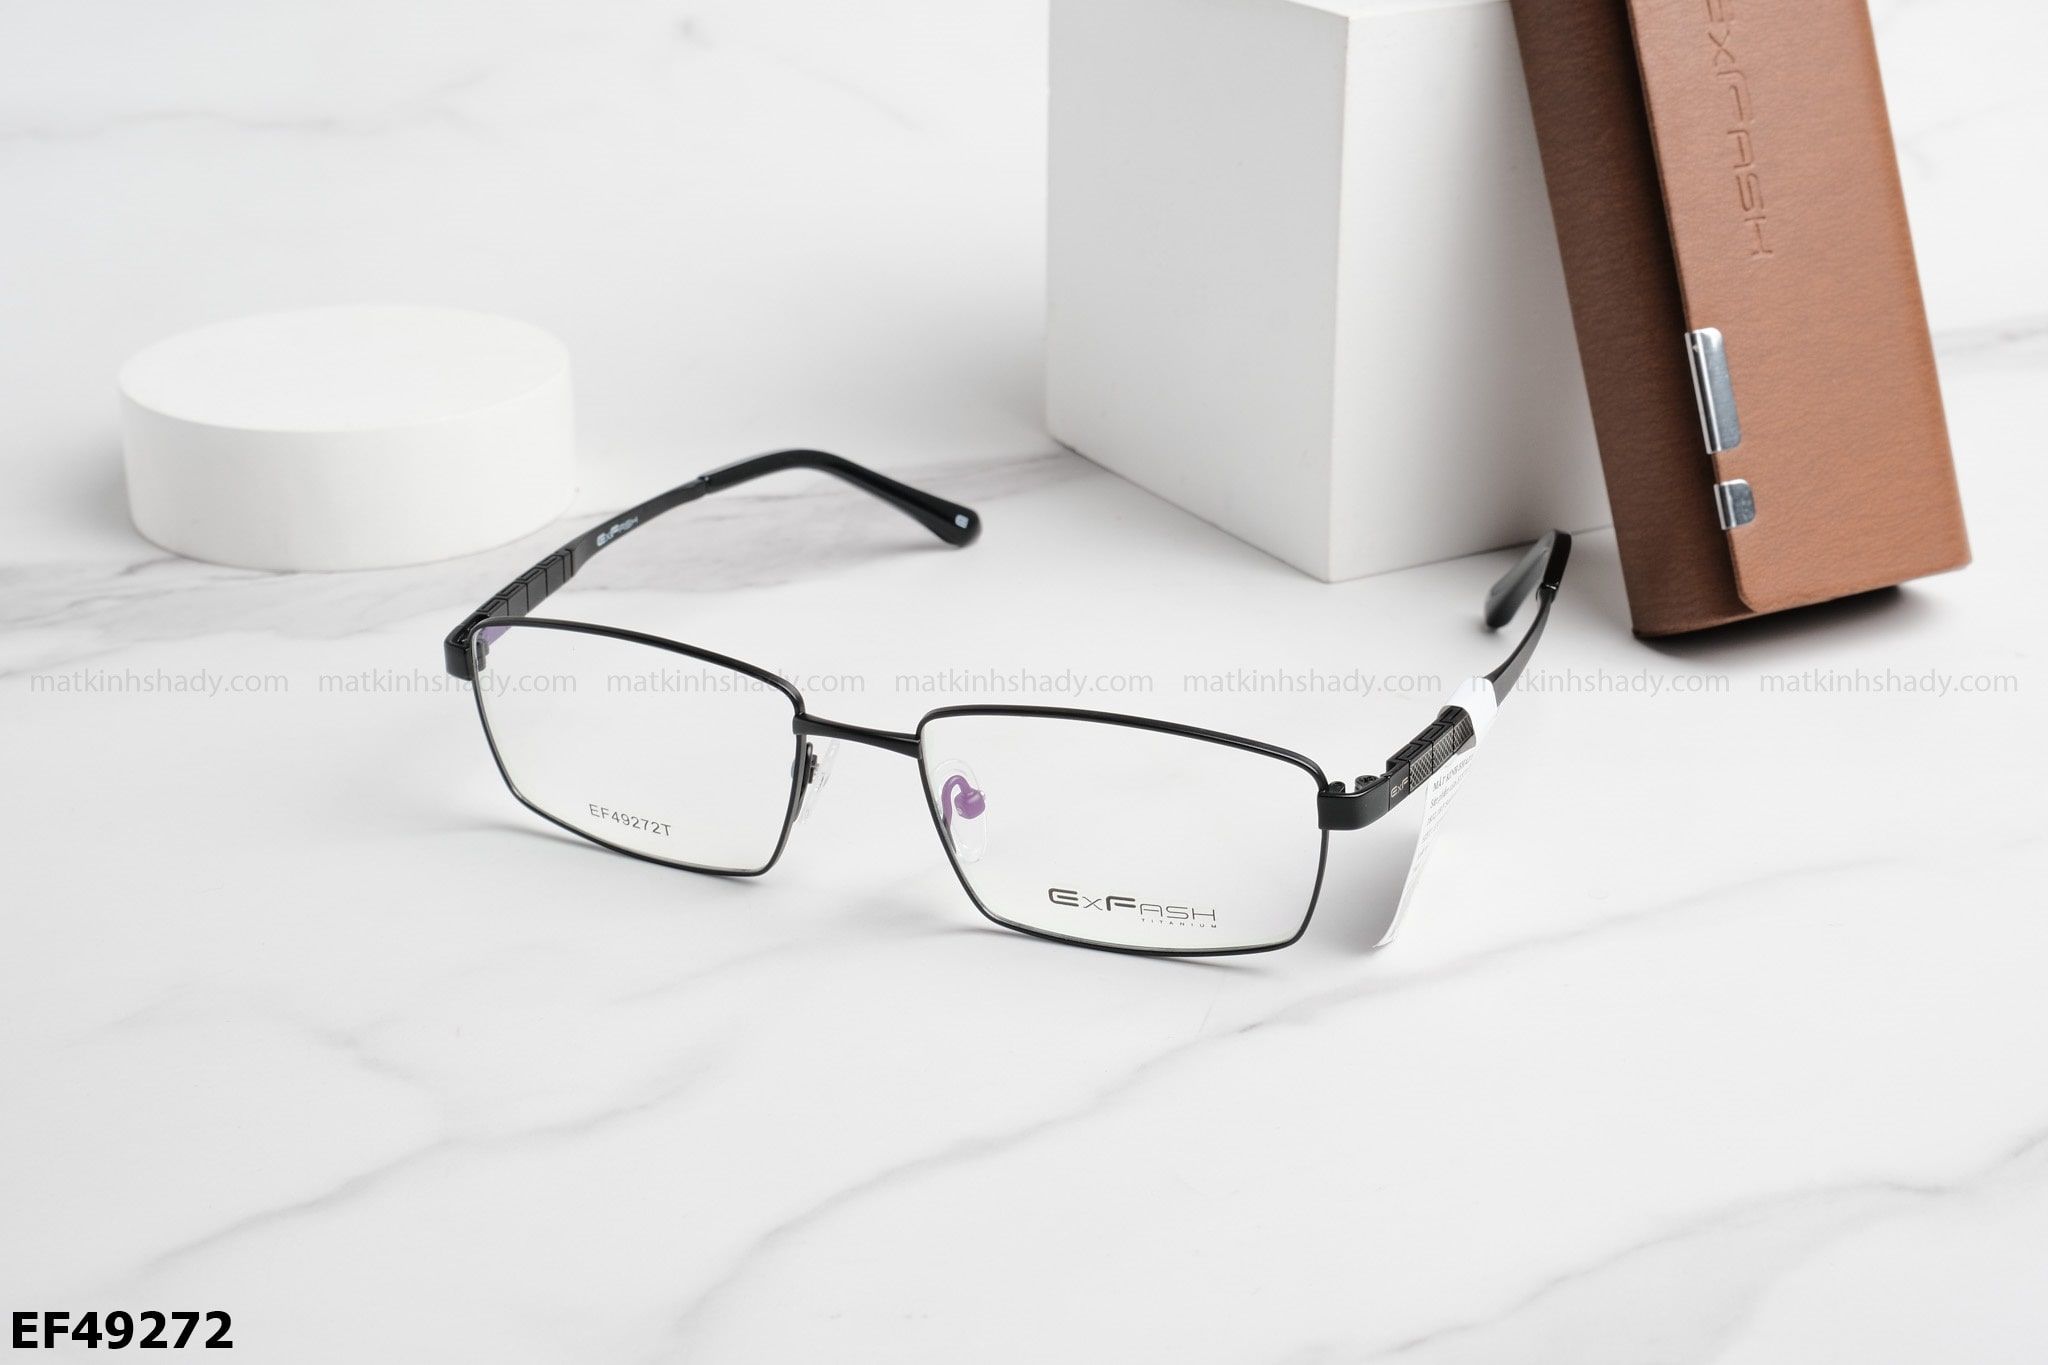  Exfash Eyewear - Glasses - EF49272 